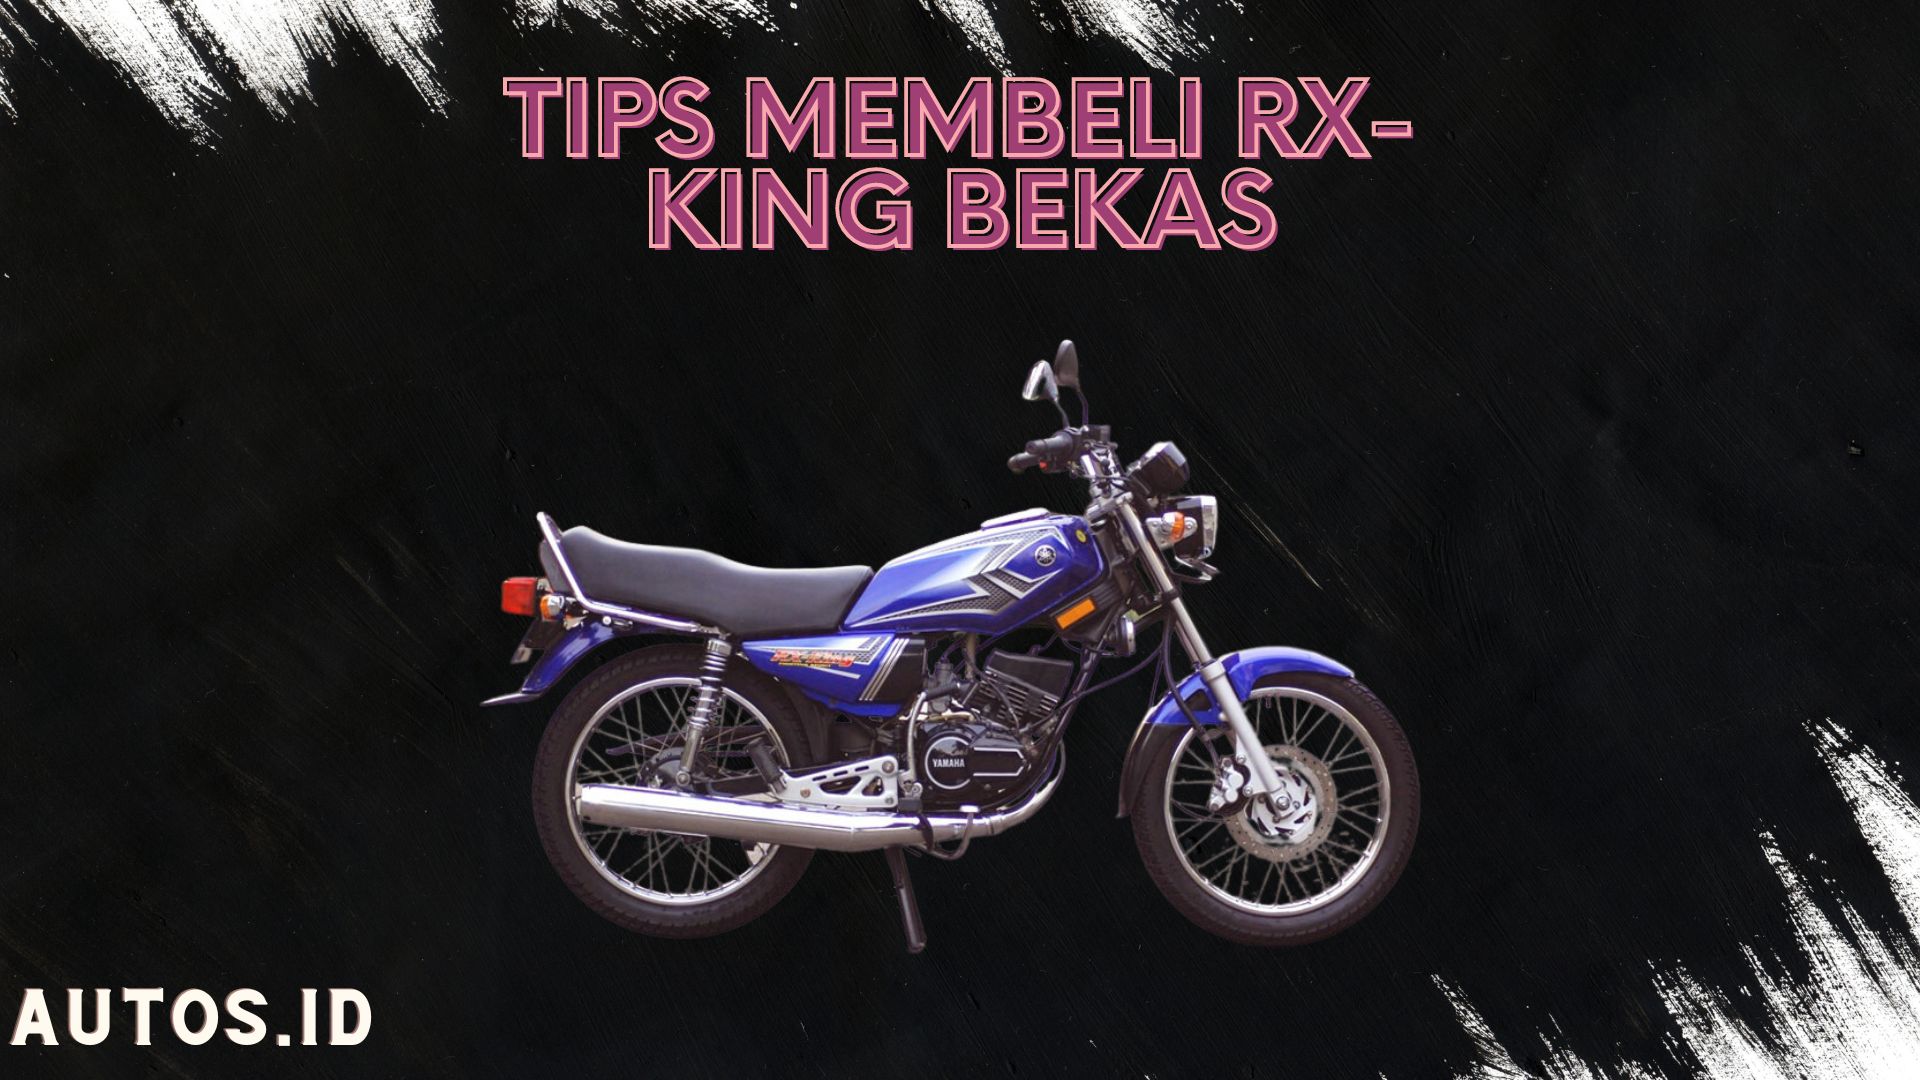 Tips membeli RX-King bekas